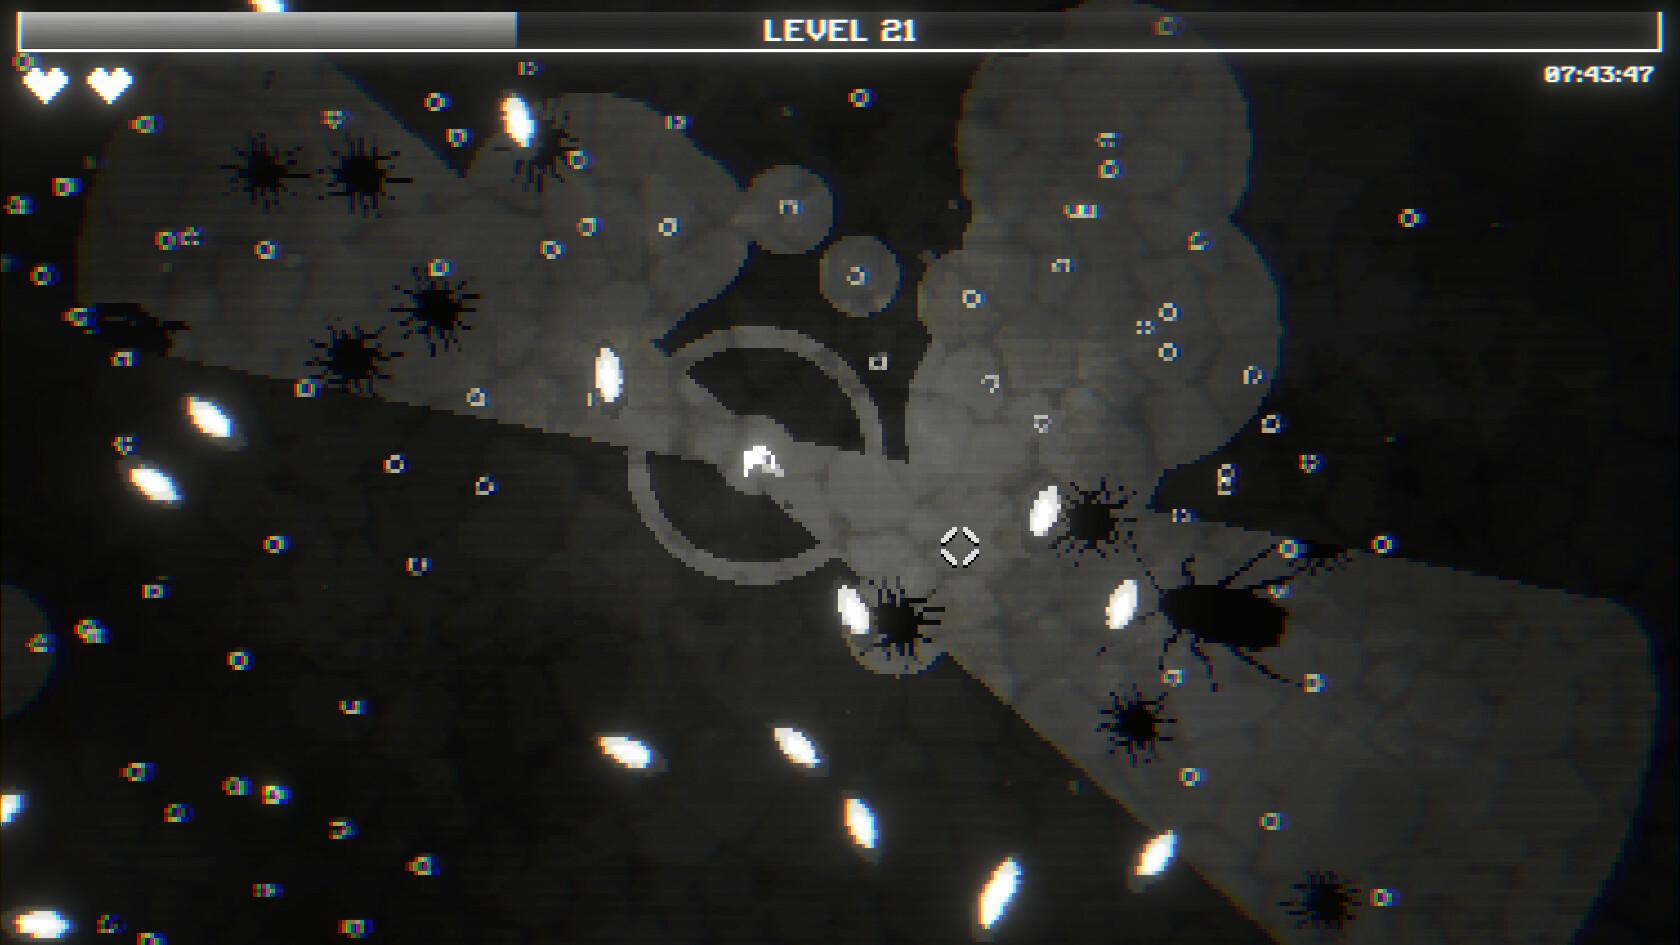 Screenshot №9 from game Disfigure